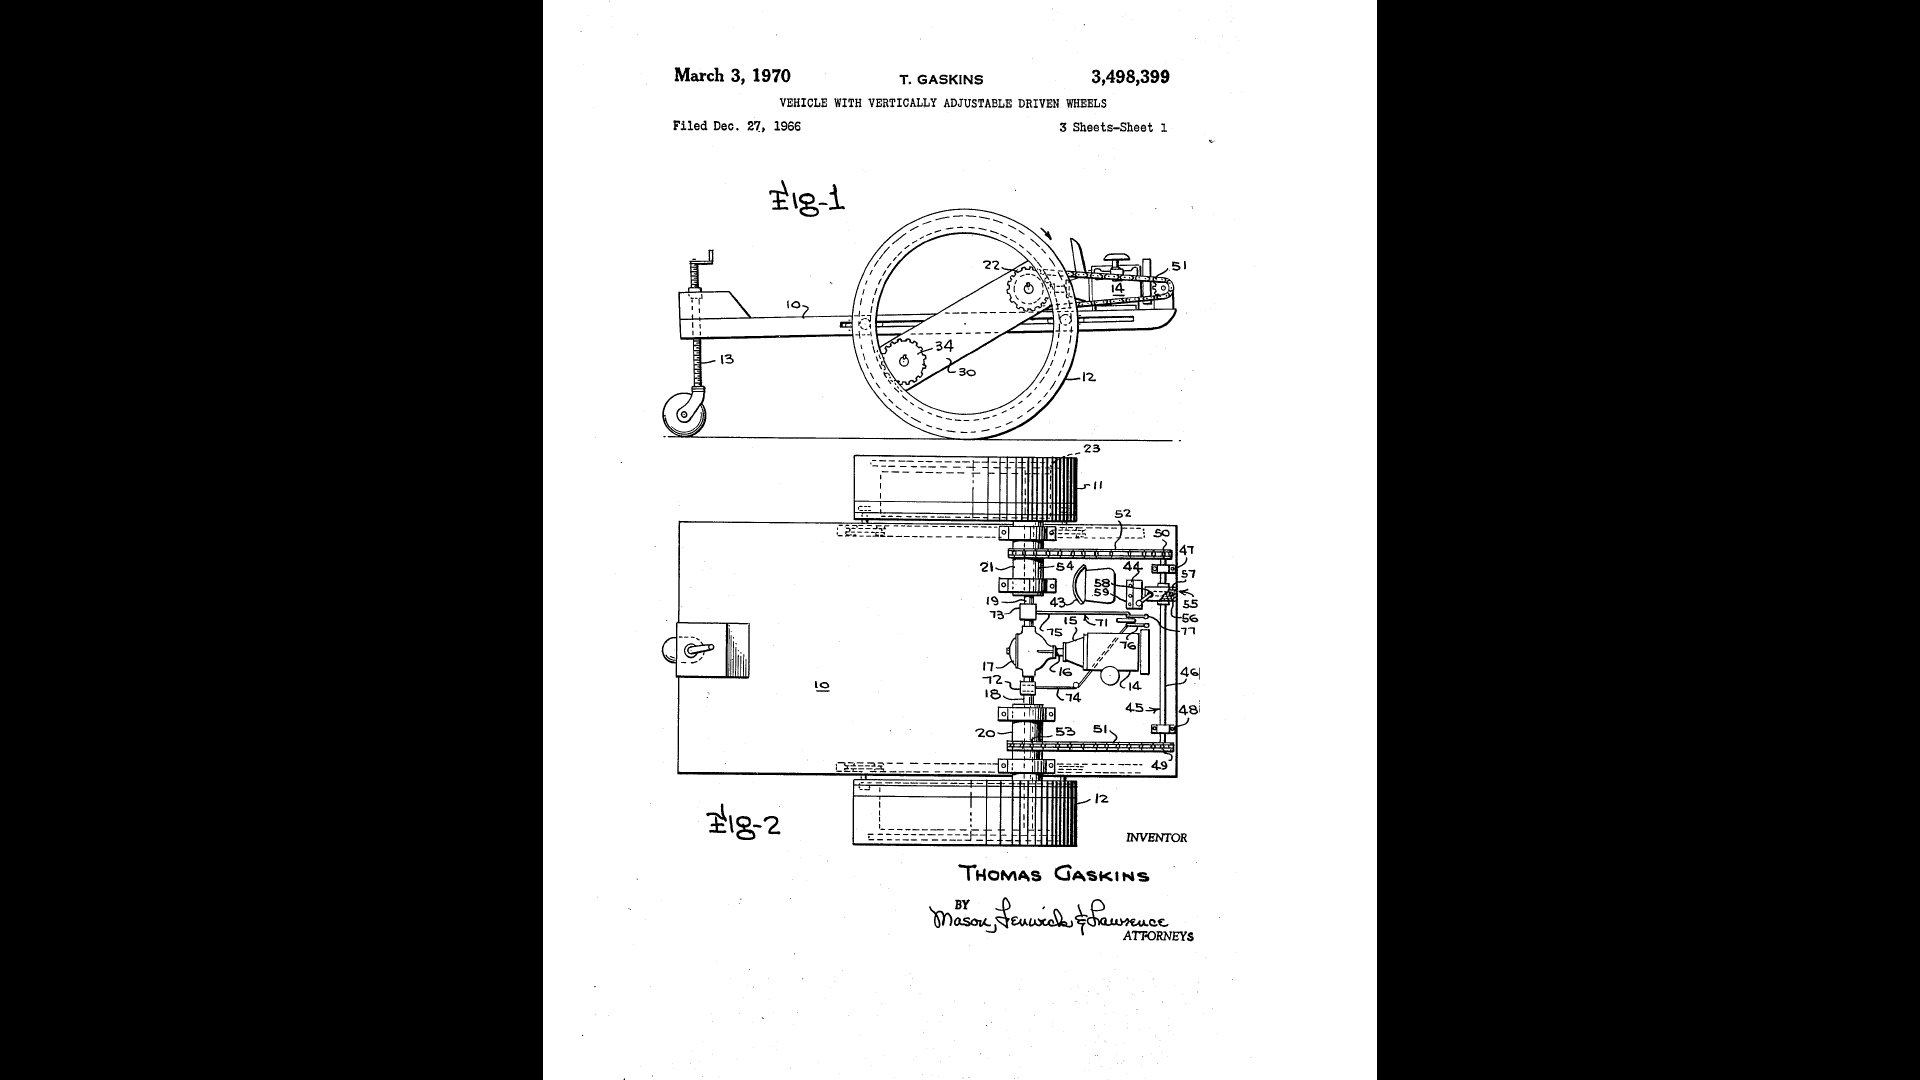 Tom Gaskins Patent No. 3,498,399